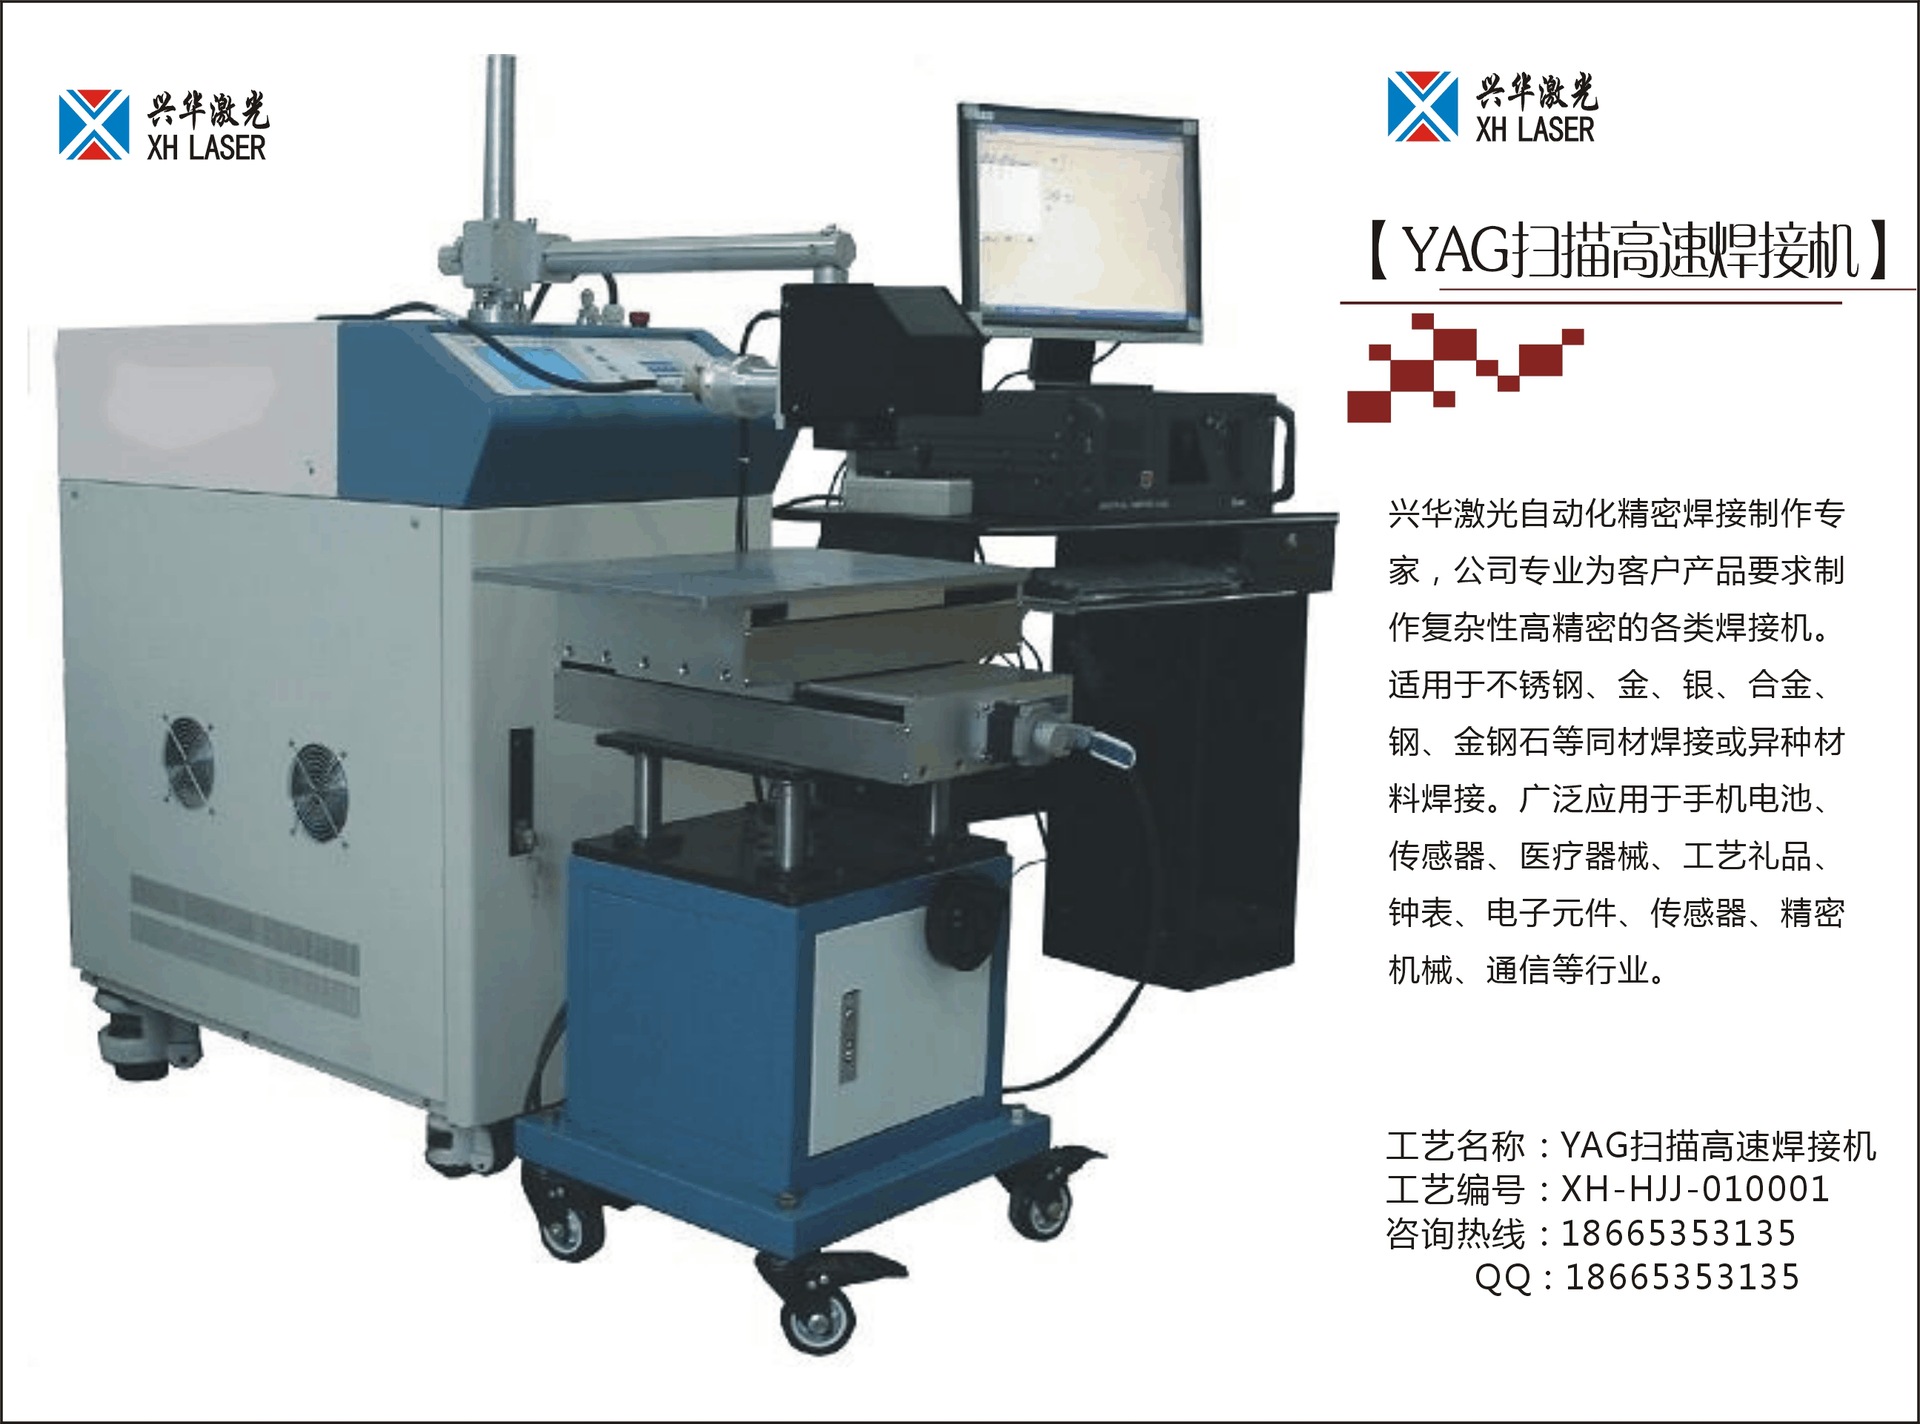 YAG掃描調整焊接機